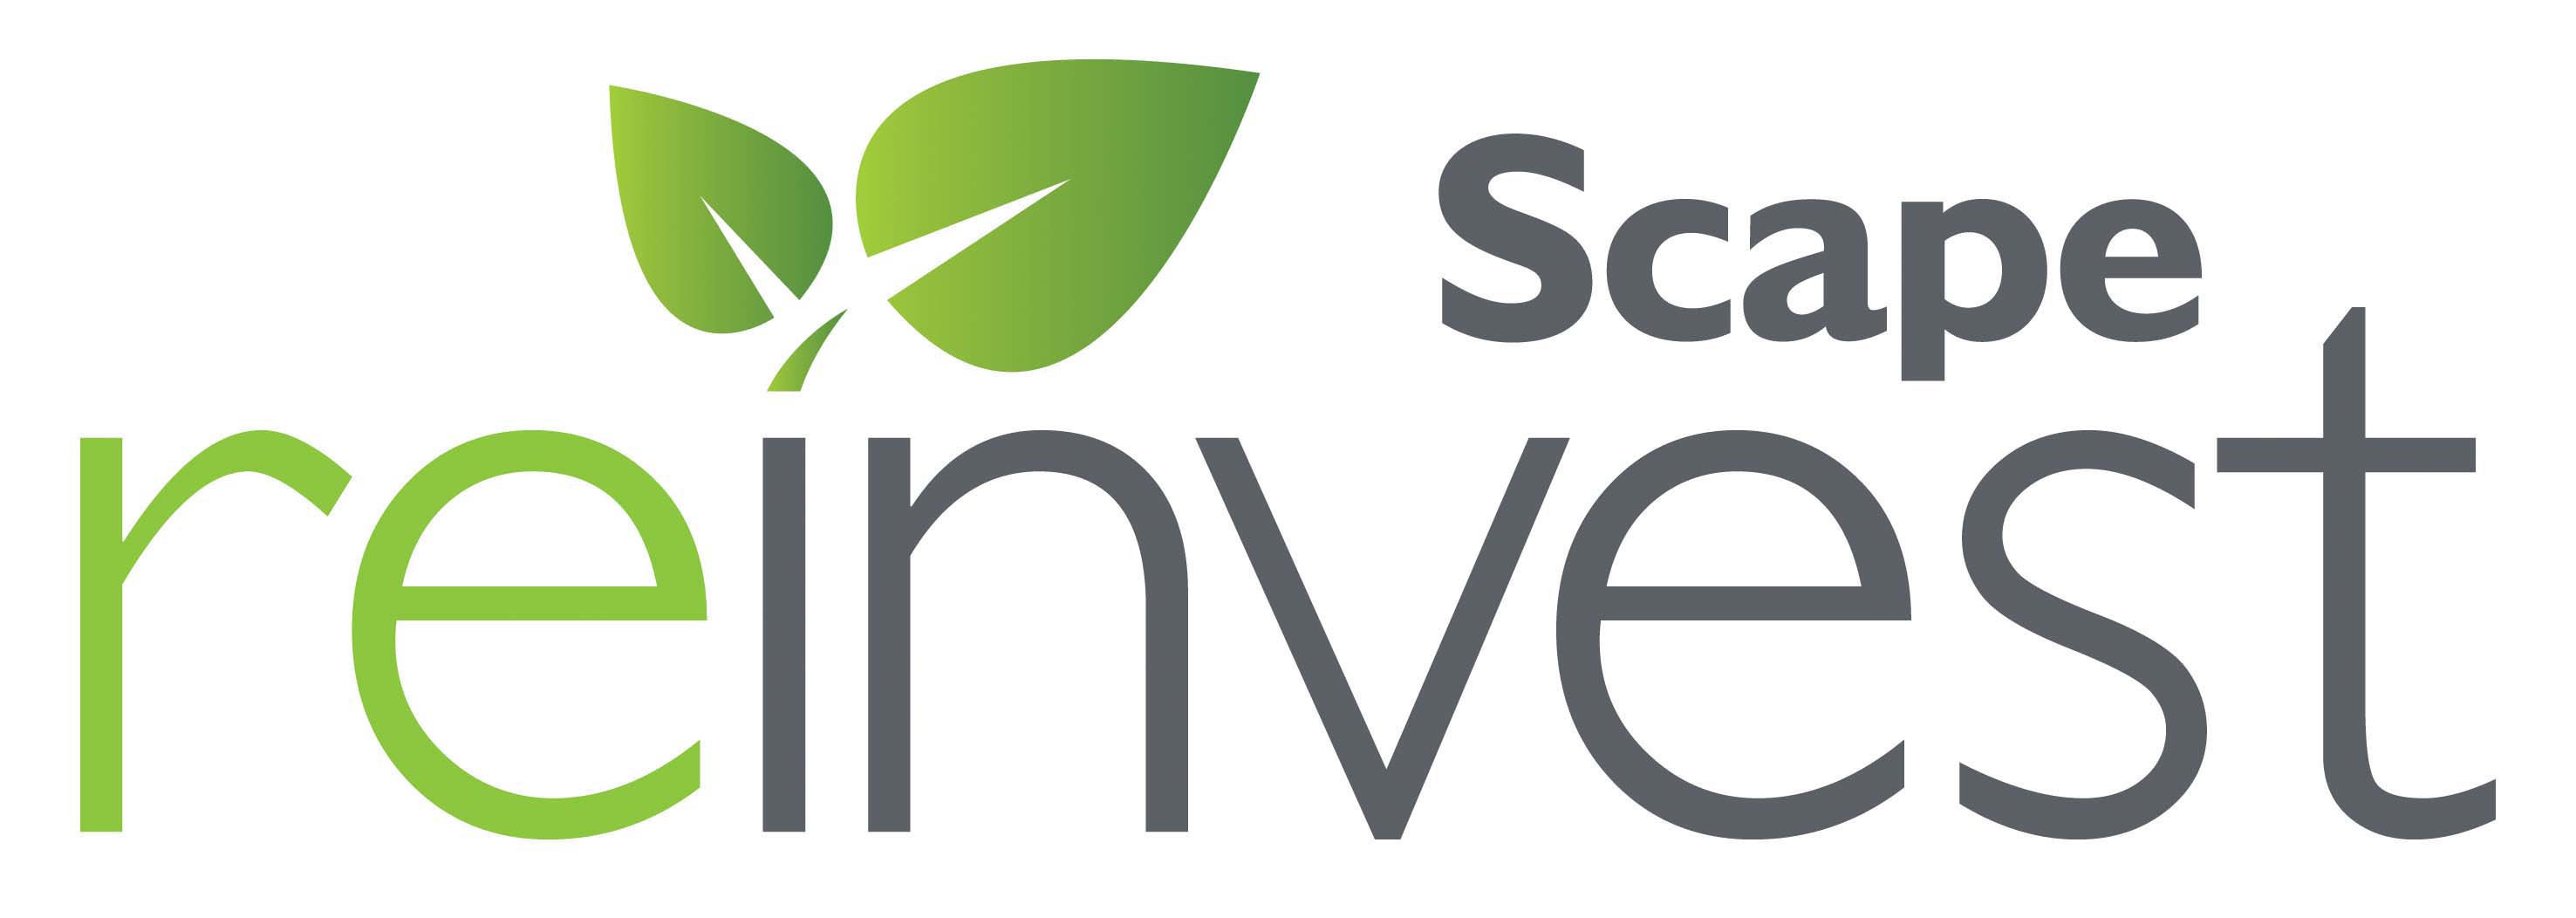 Scape Reinvest community fund